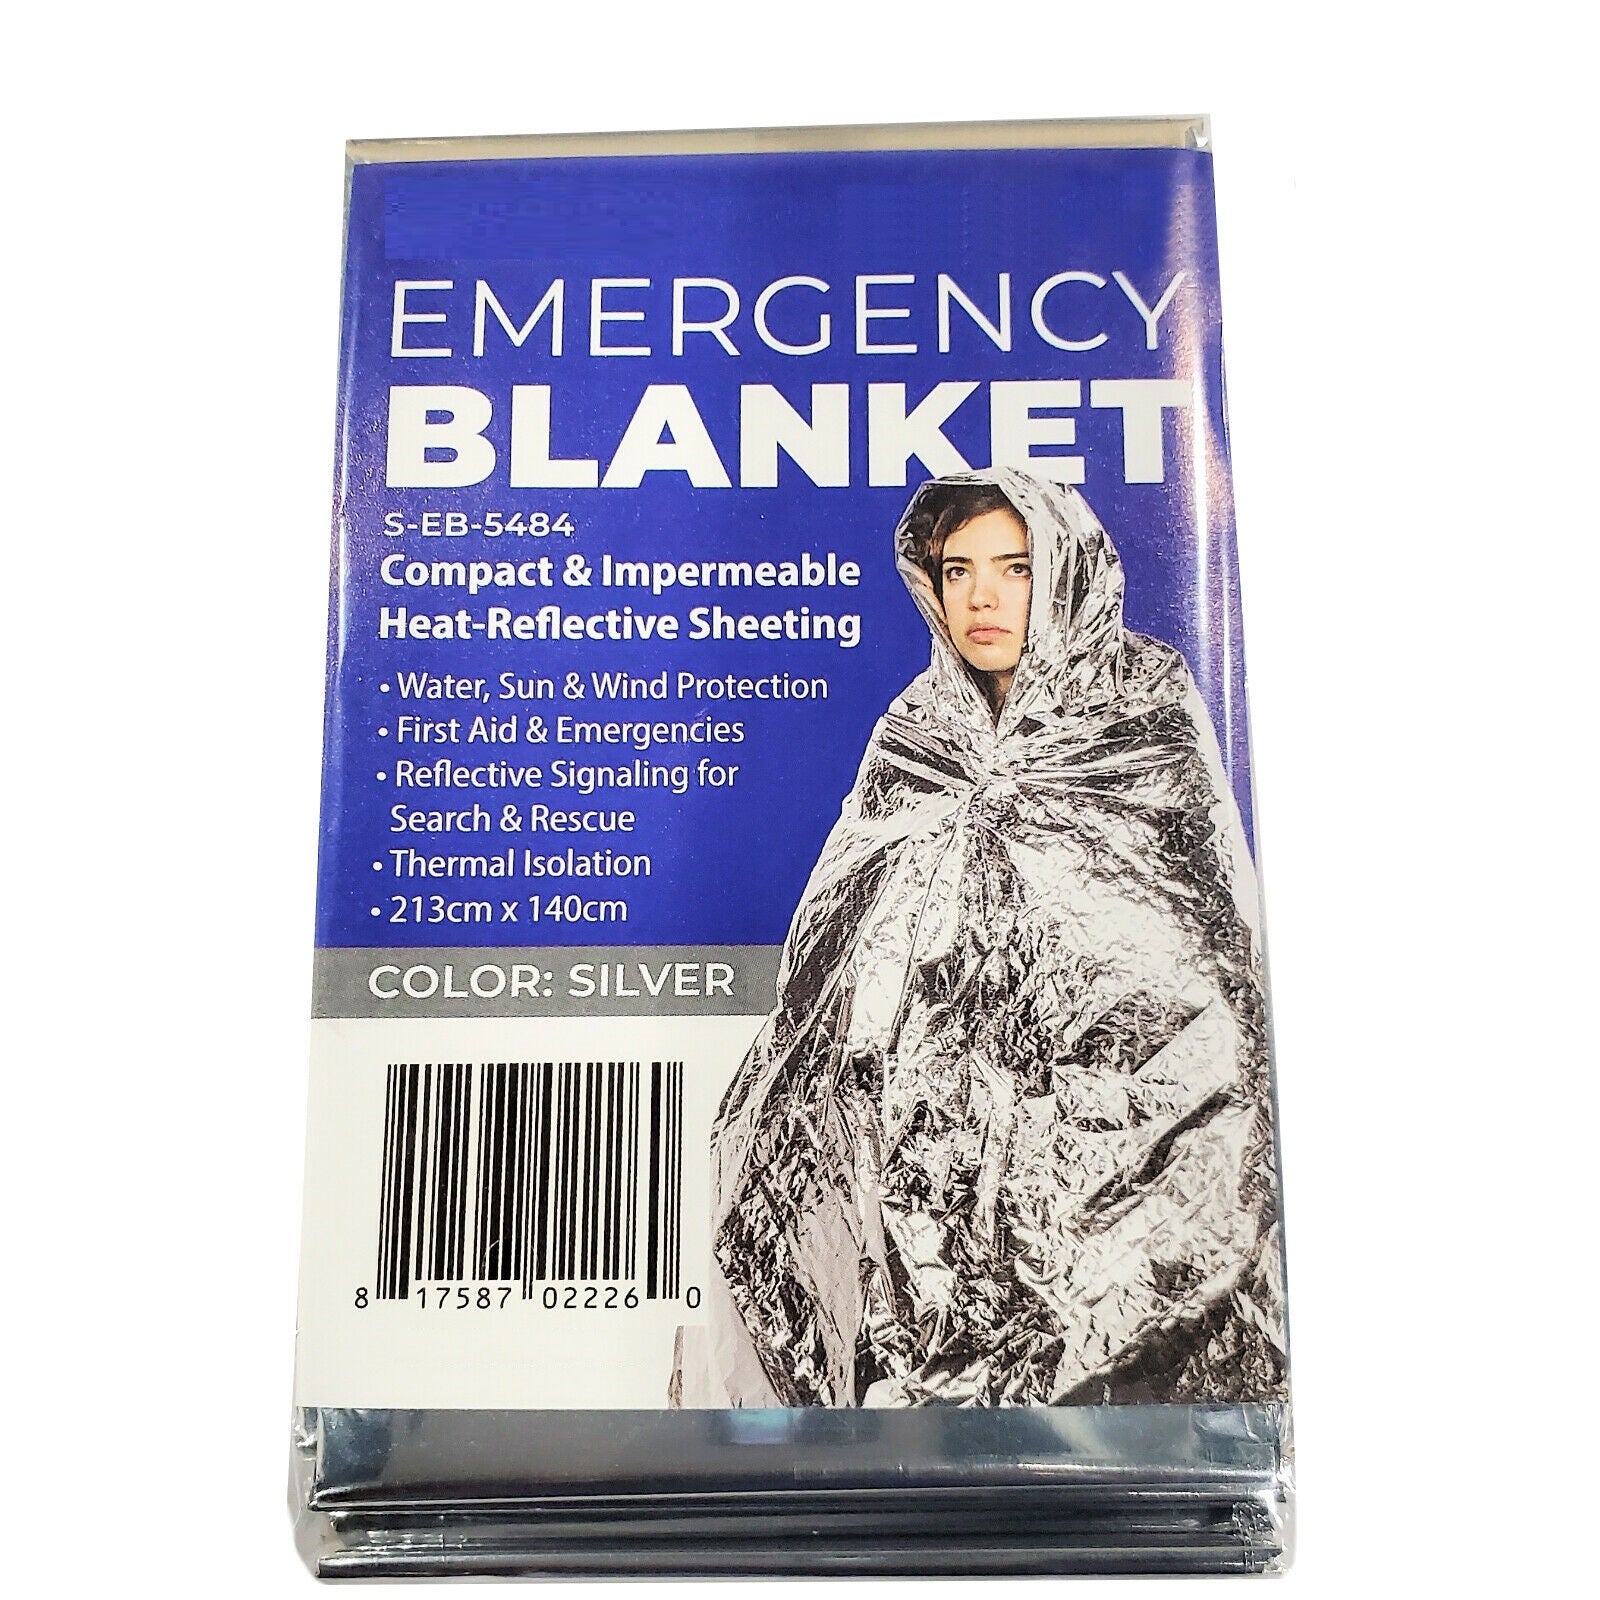 Emergency thermal blanket Pack of 5 - Silver reflective solar blanket